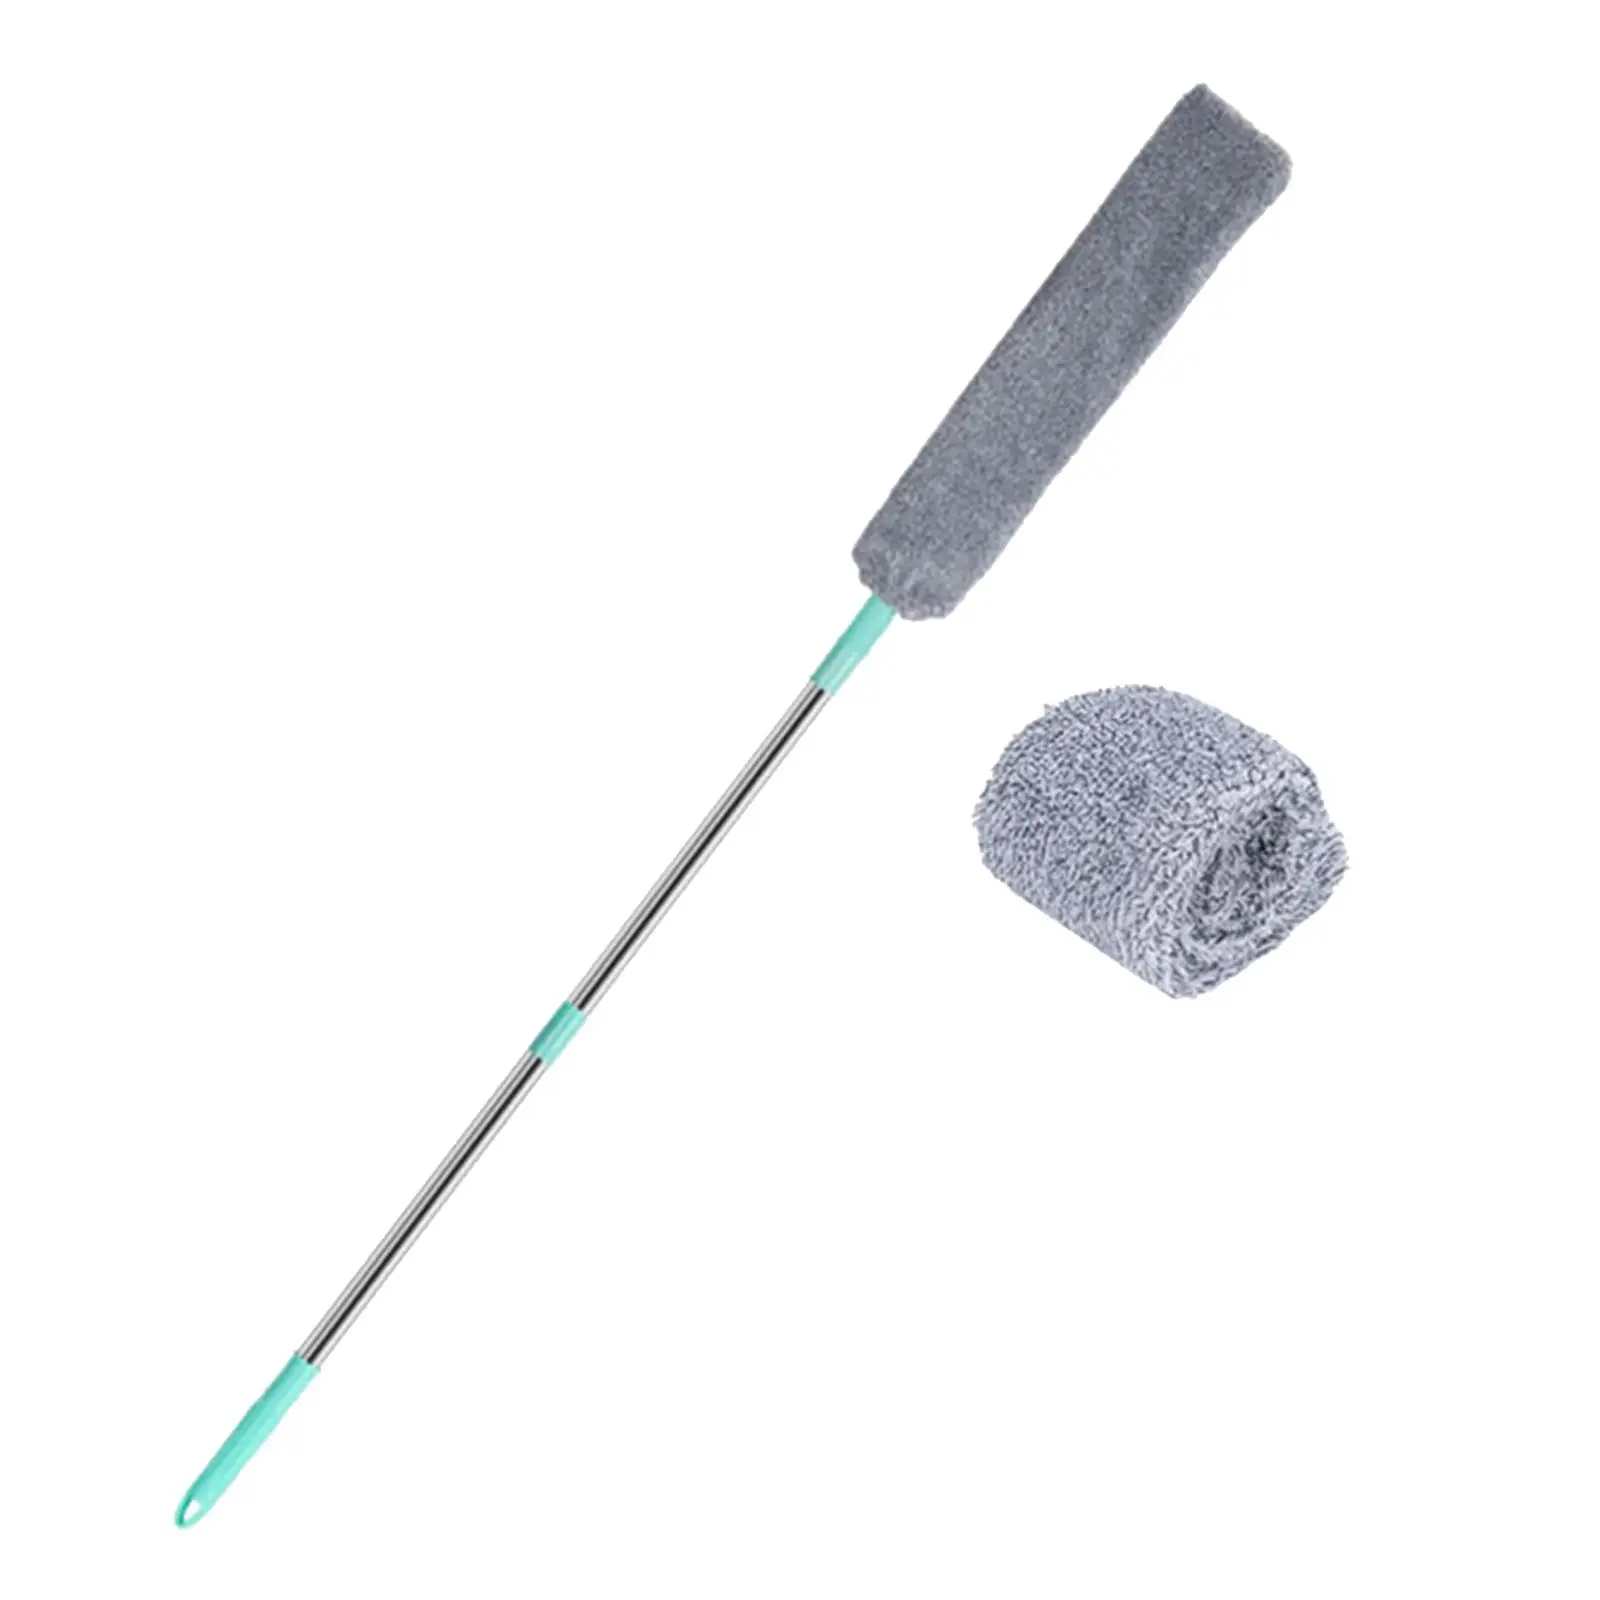 Gap Dust Cleaning Brush Microfiber Duster Detachable Adjustable Lengthening